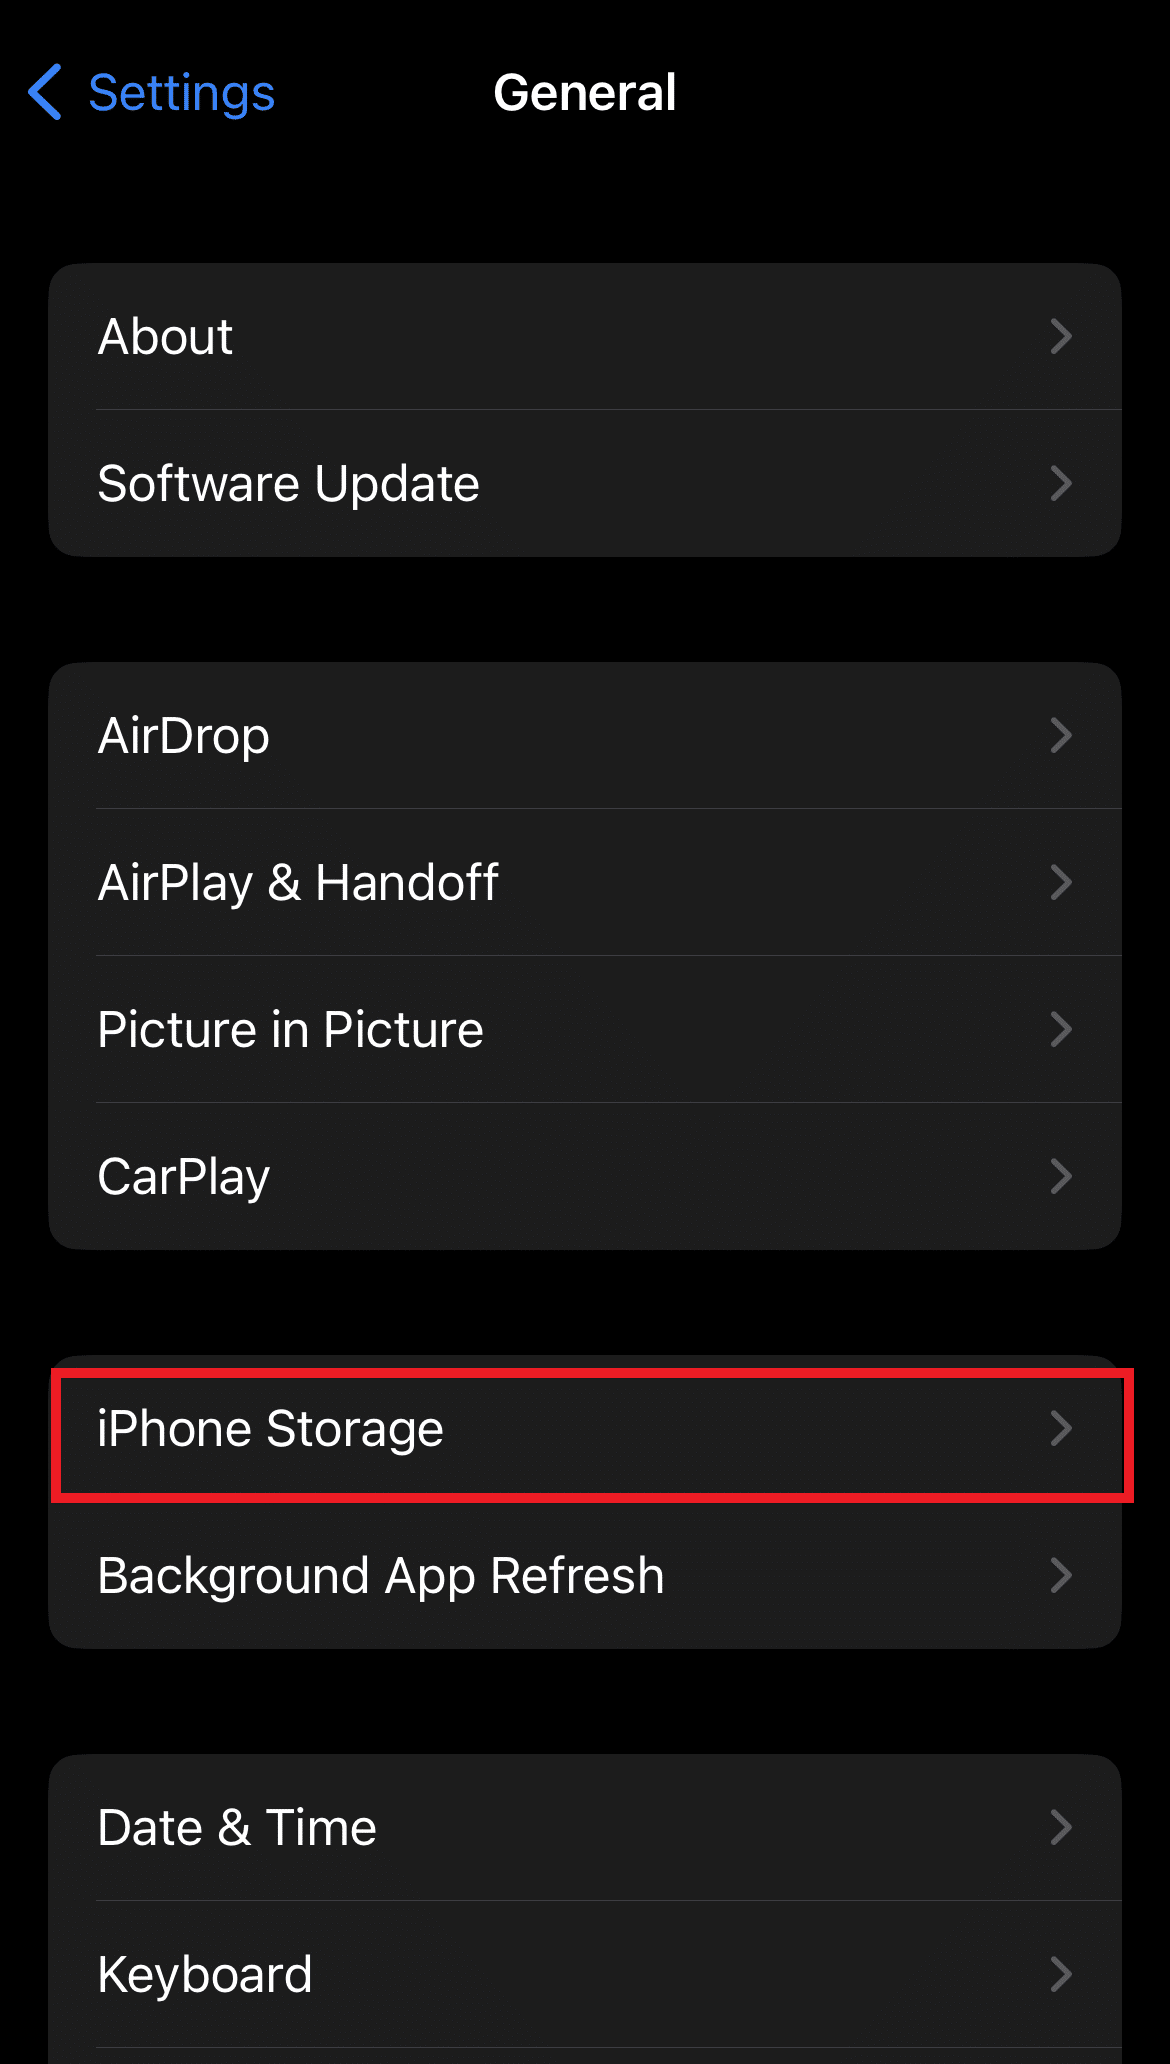 Tap on iPhone Storage